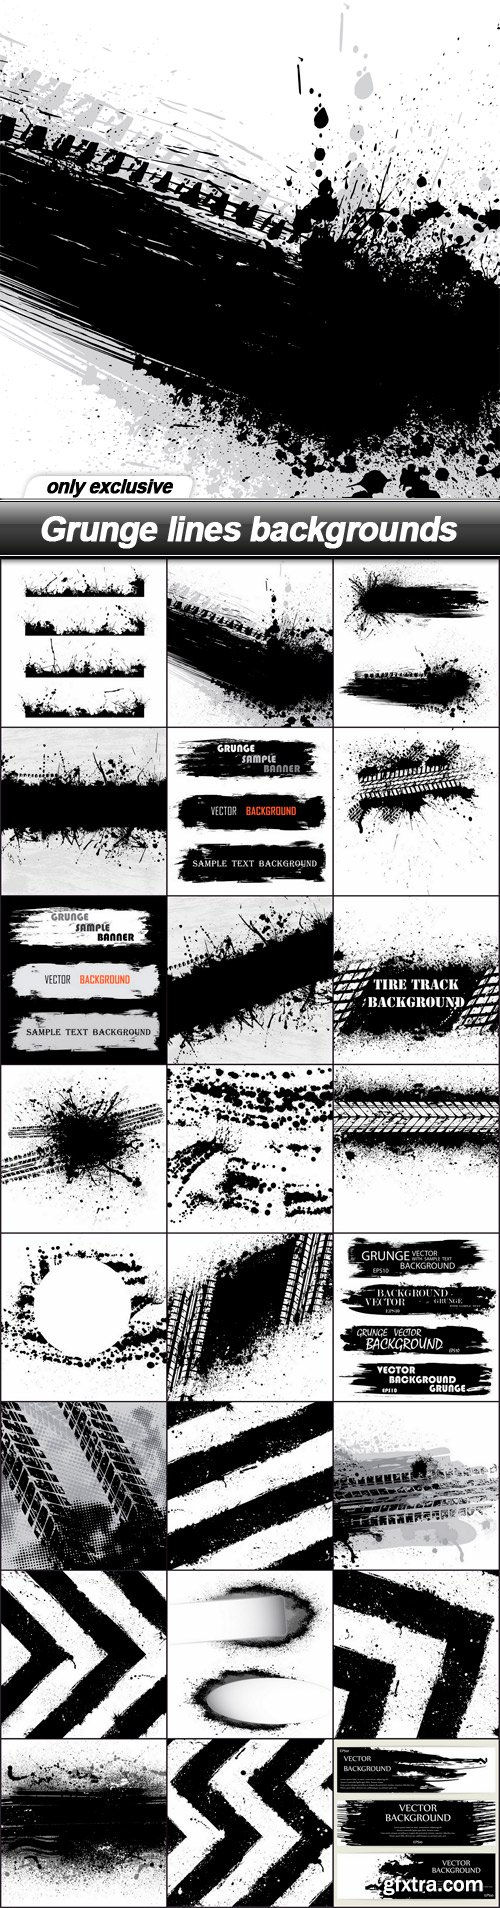 Grunge lines backgrounds - 24 EPS